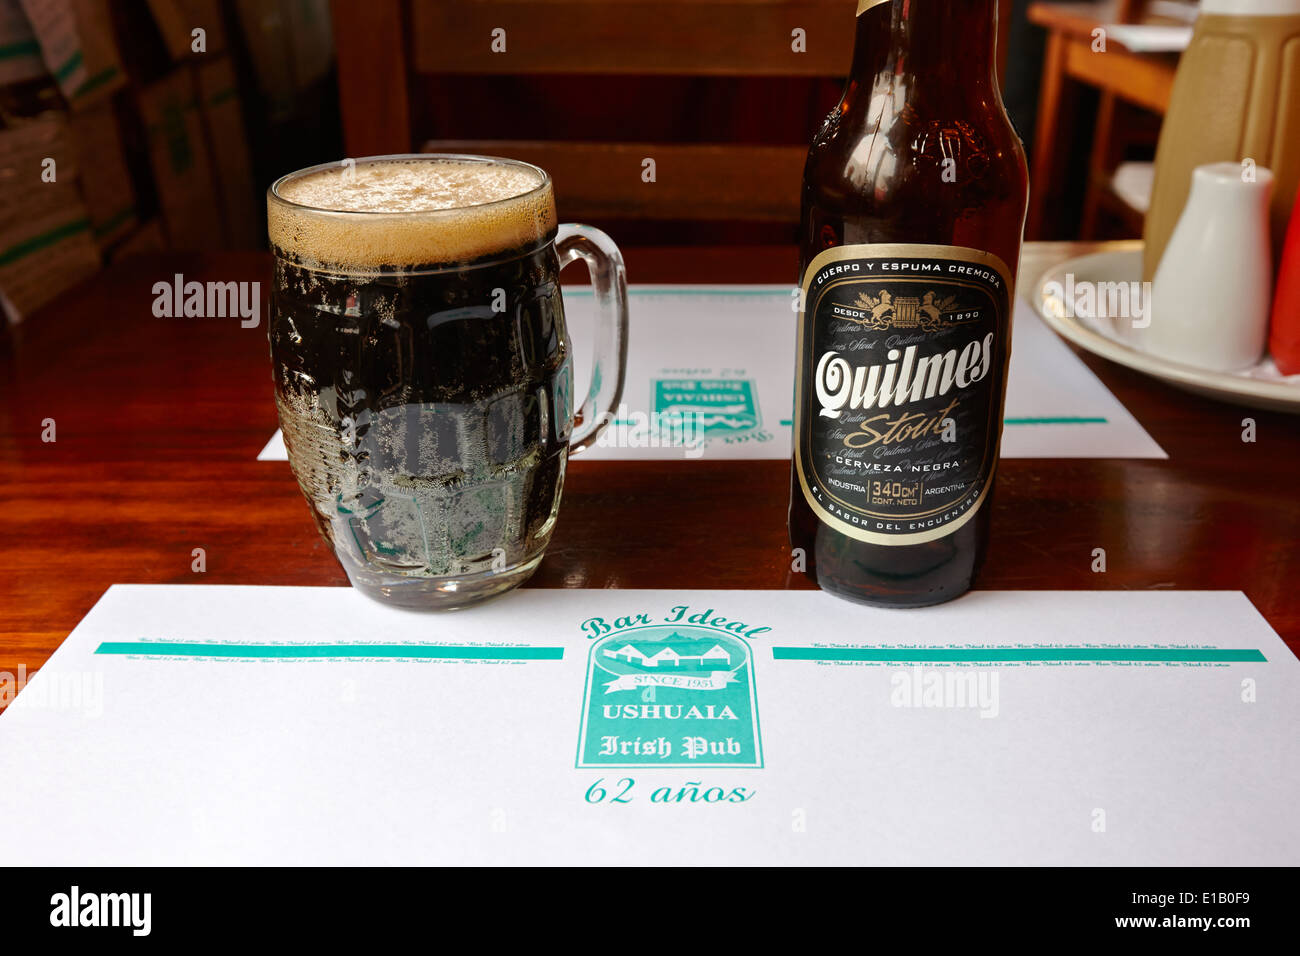 quilmes stout at irish pub and restaurant Ushuaia Argentina Stock Photo